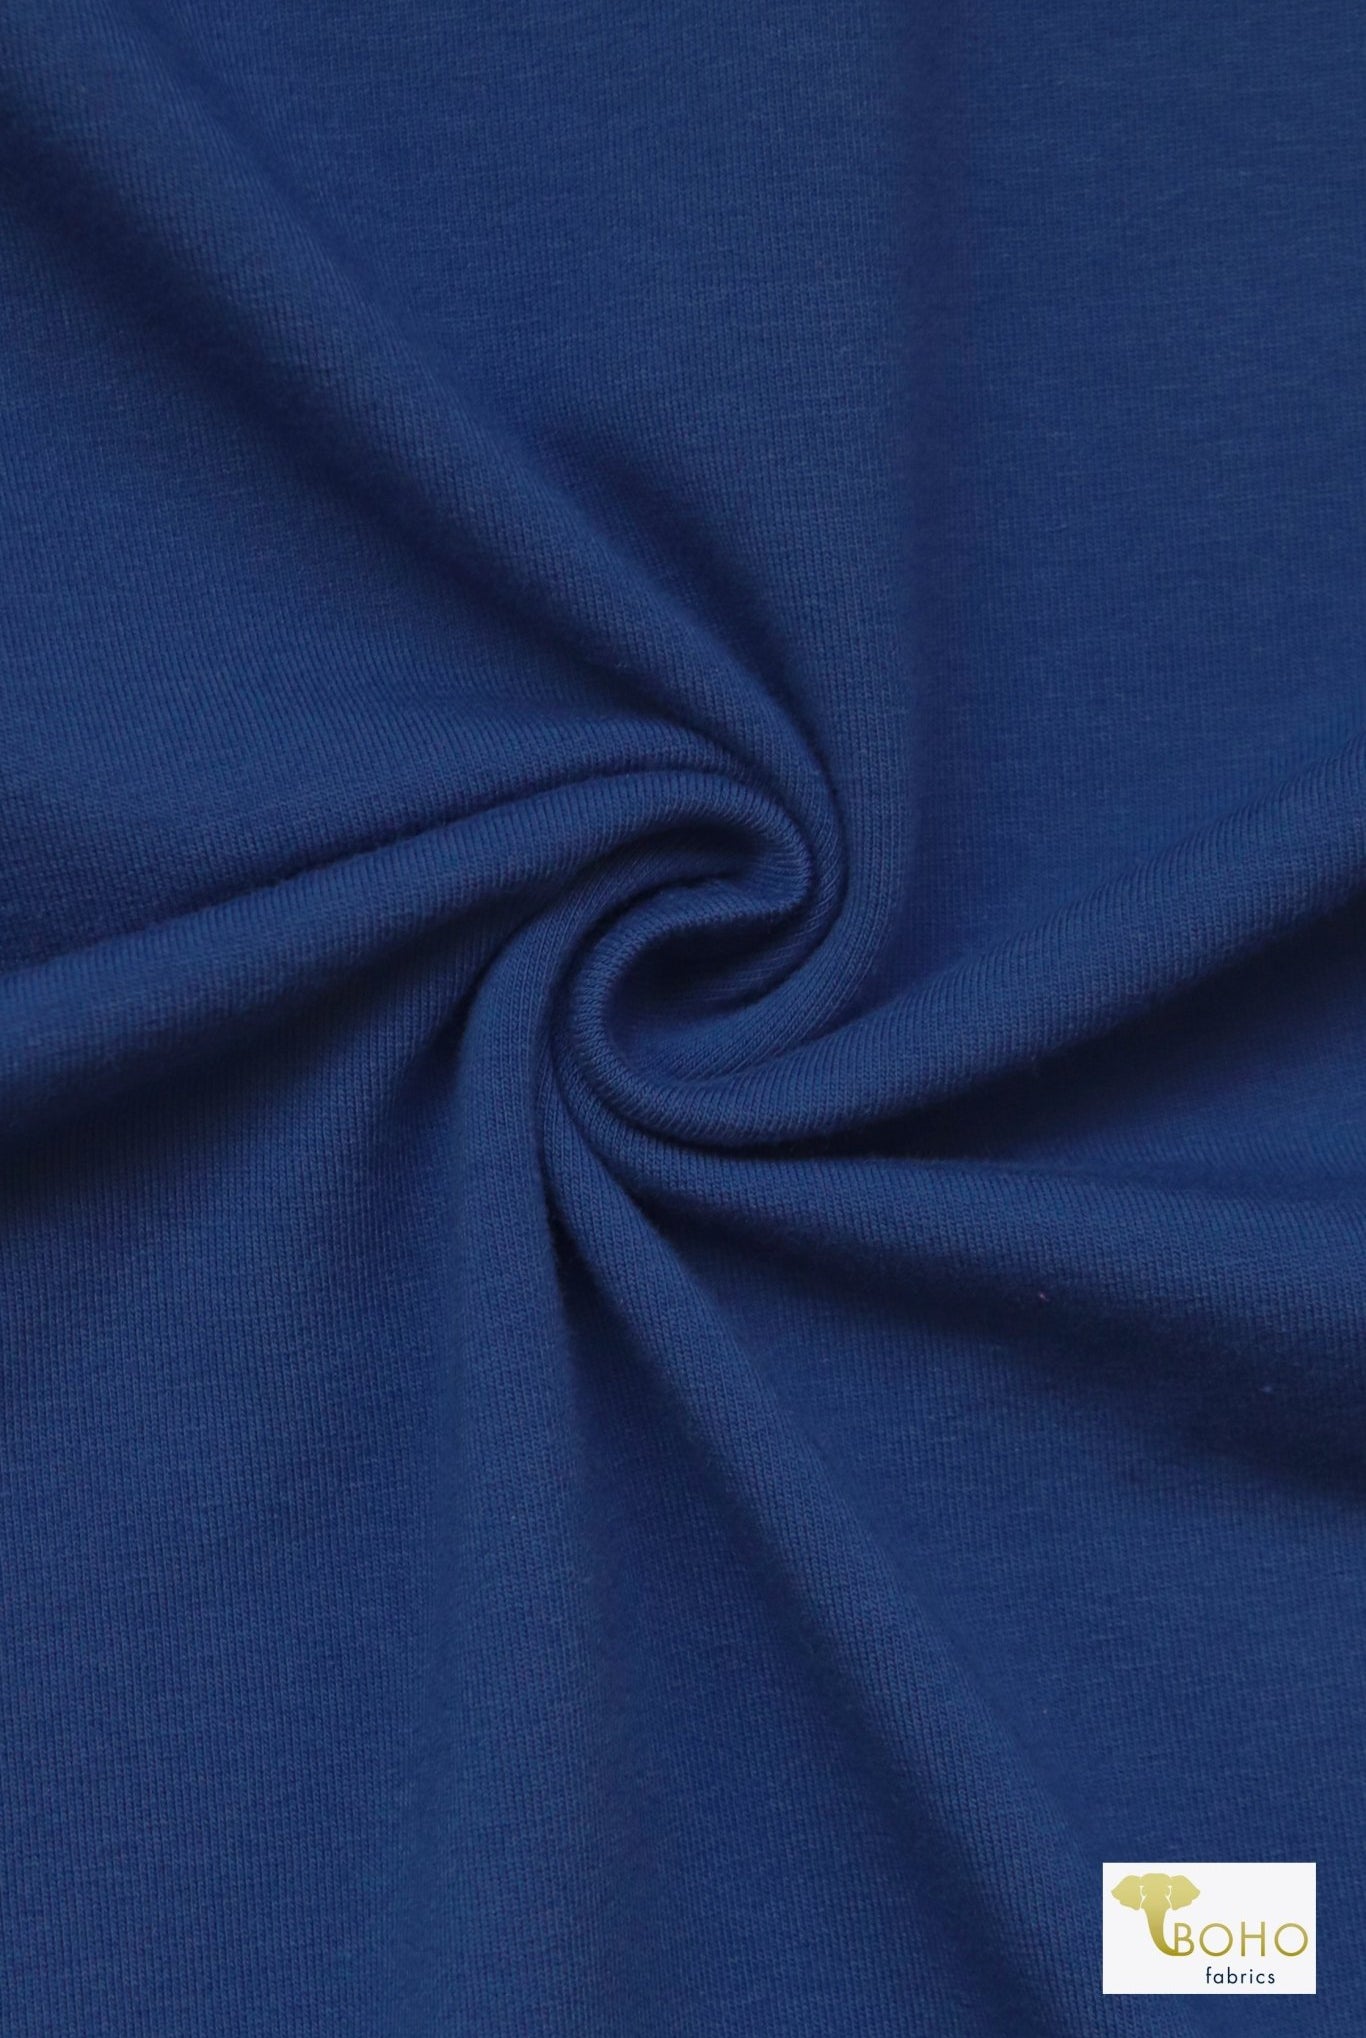 Moonlight Blue, Solid Cotton Spandex Knit Fabric, 13 oz. - Boho Fabrics